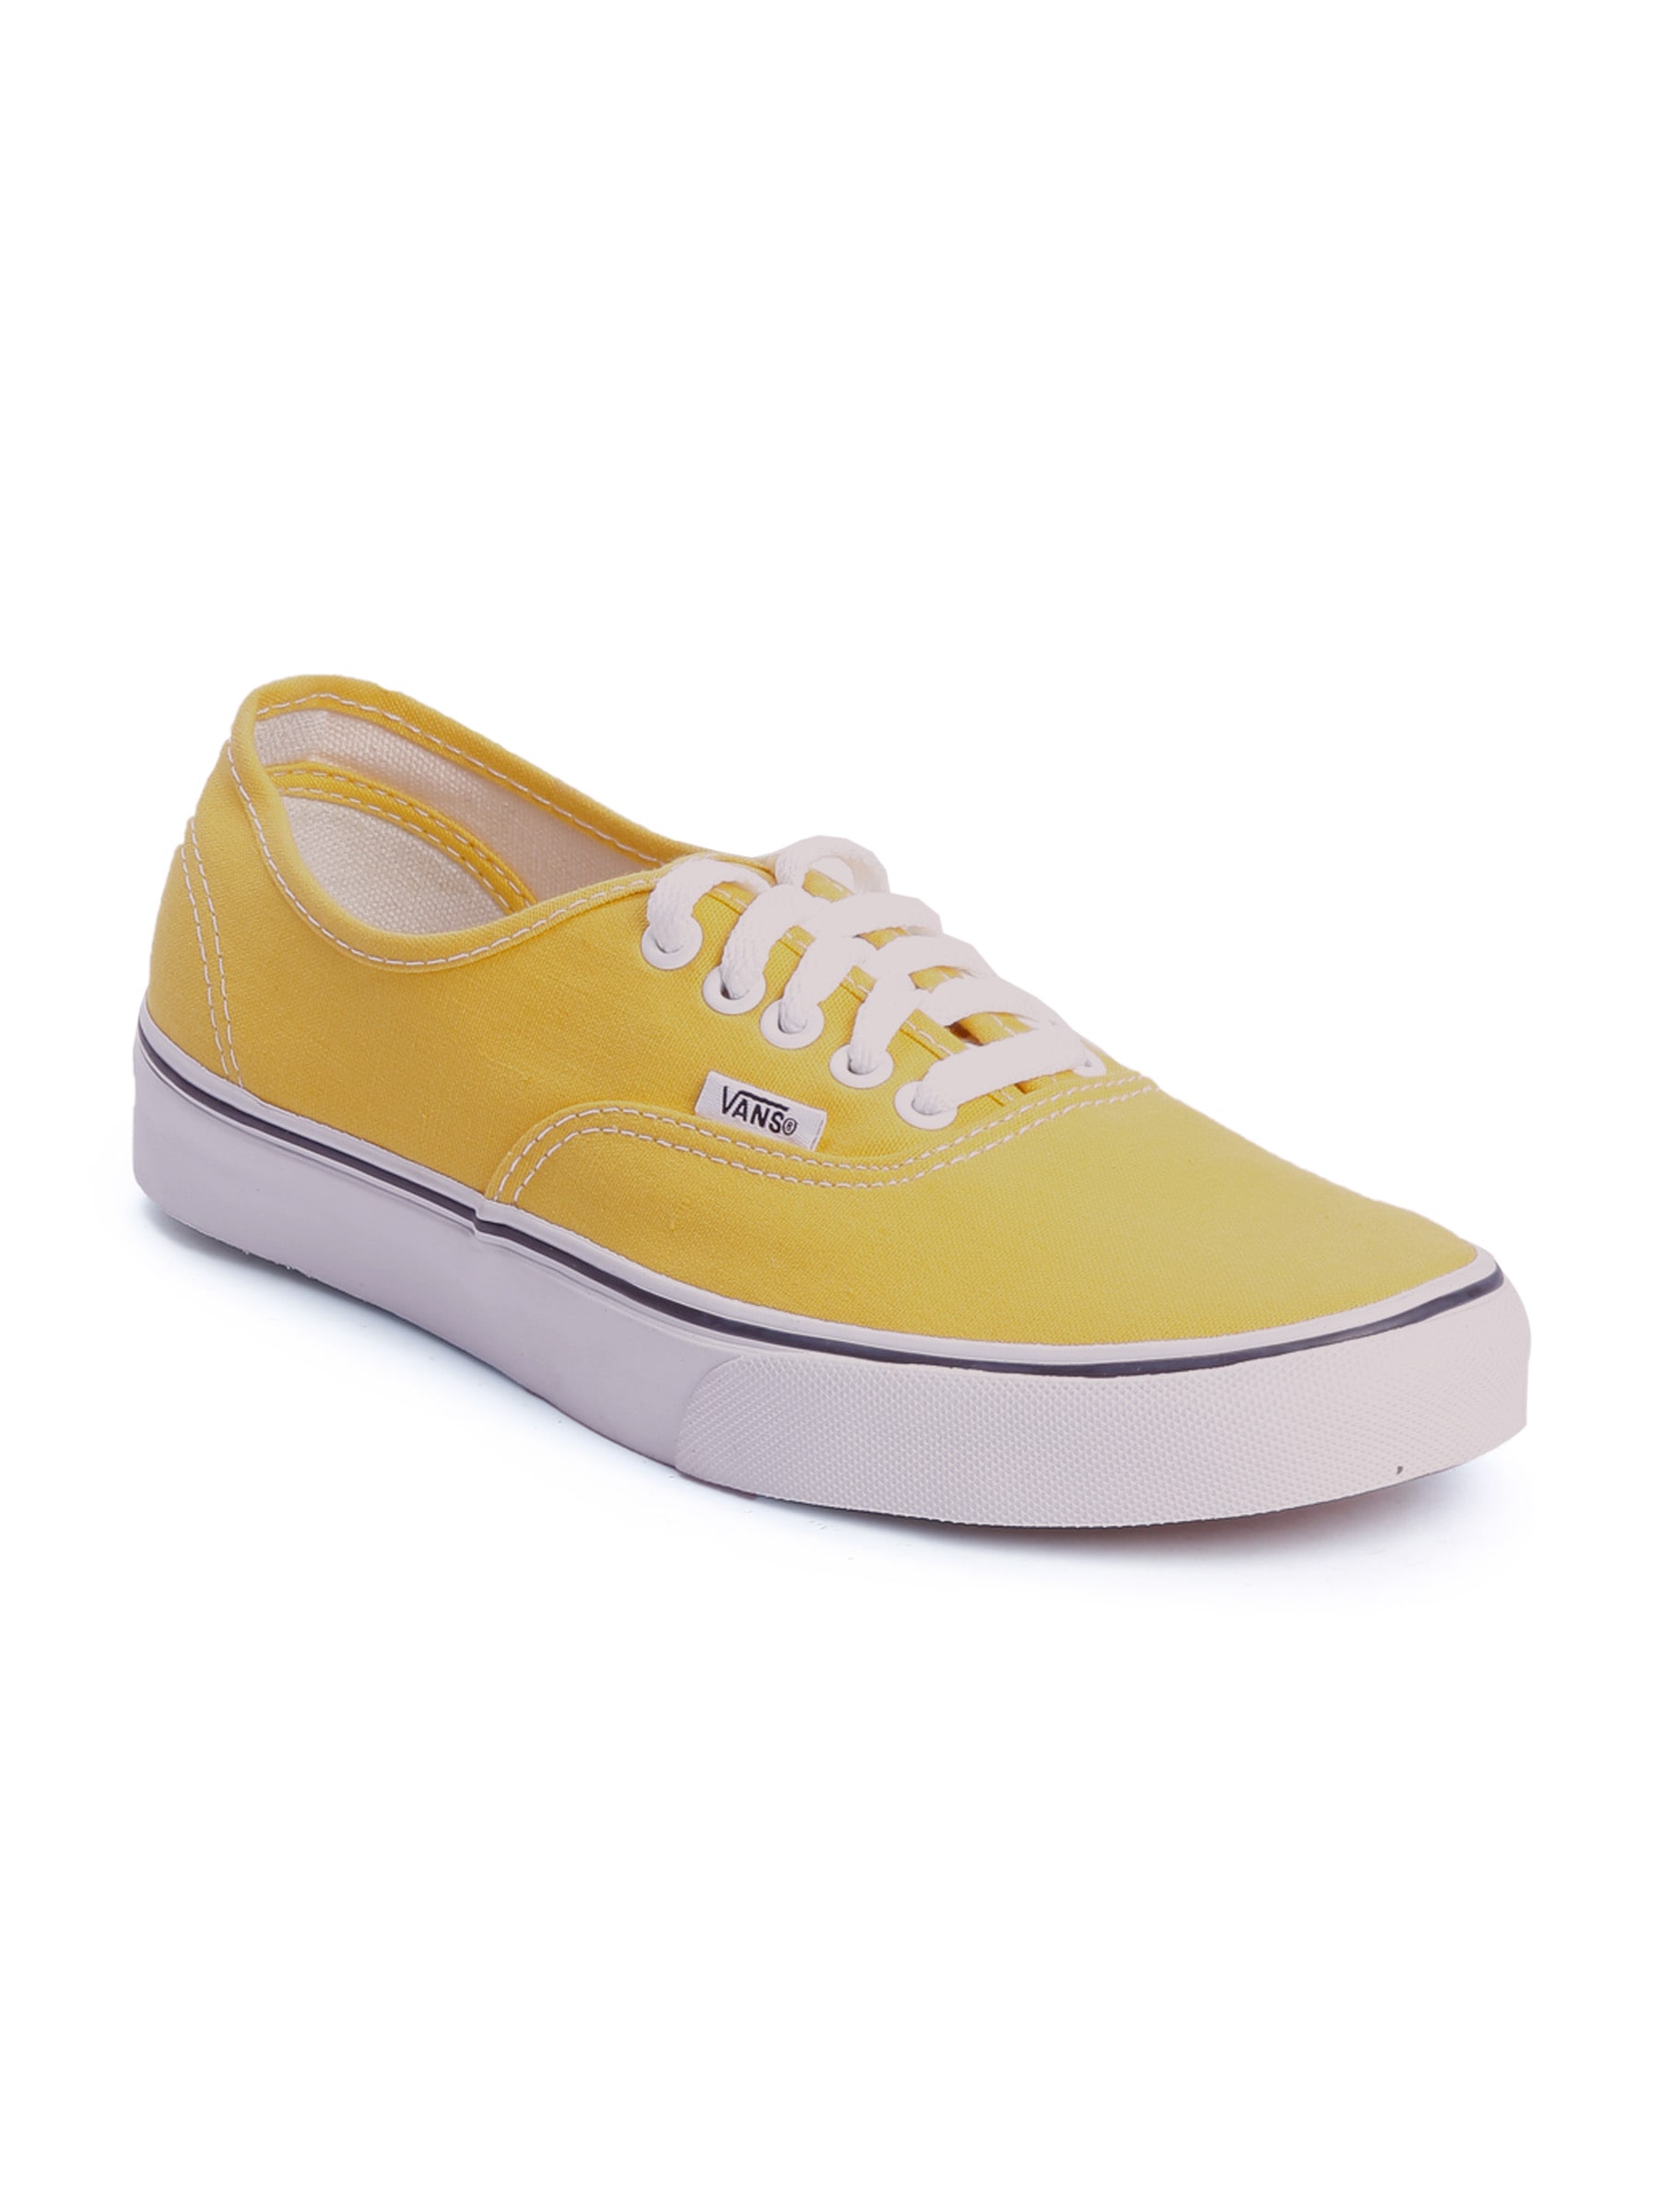 Vans unisex Authentic Yellow Casual Shoes